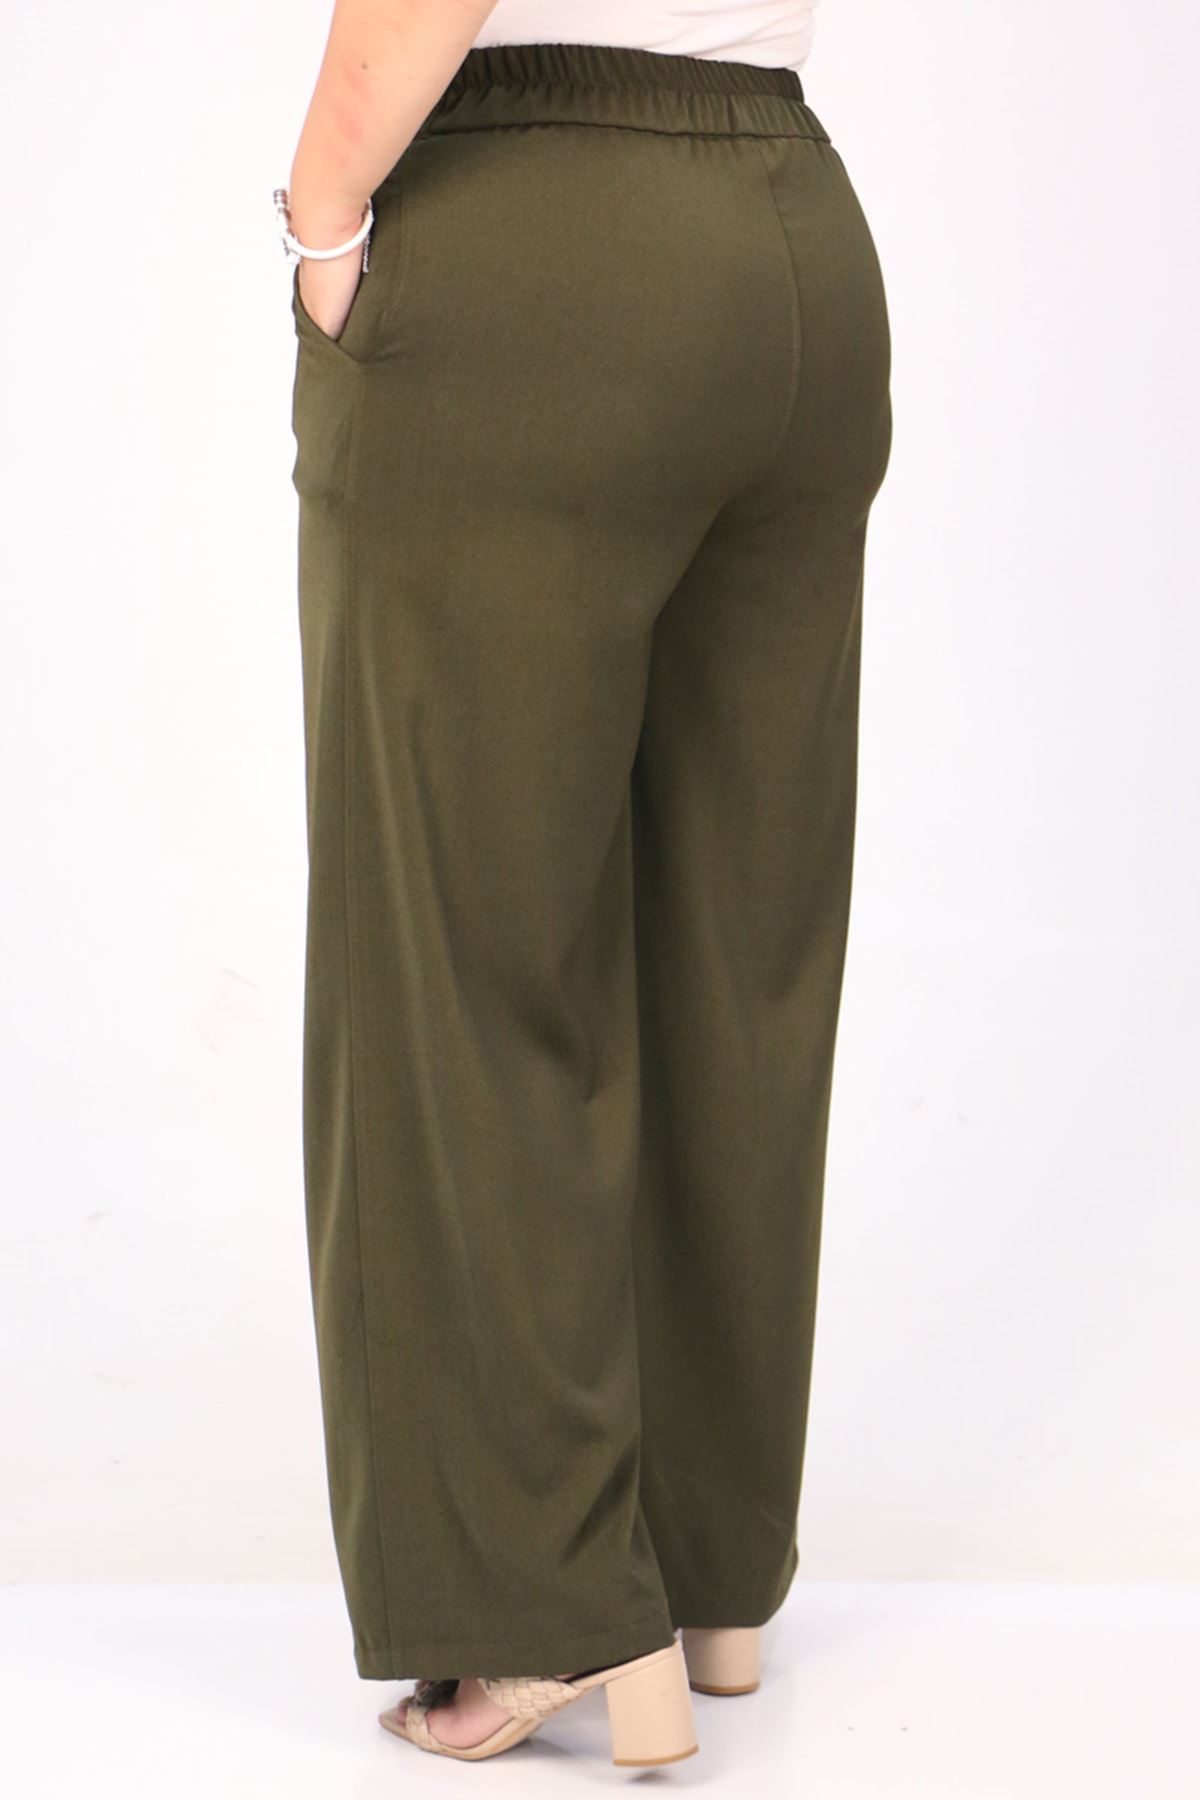 39037 Plus Size Aspen Elastic Waist Trousers - Khaki